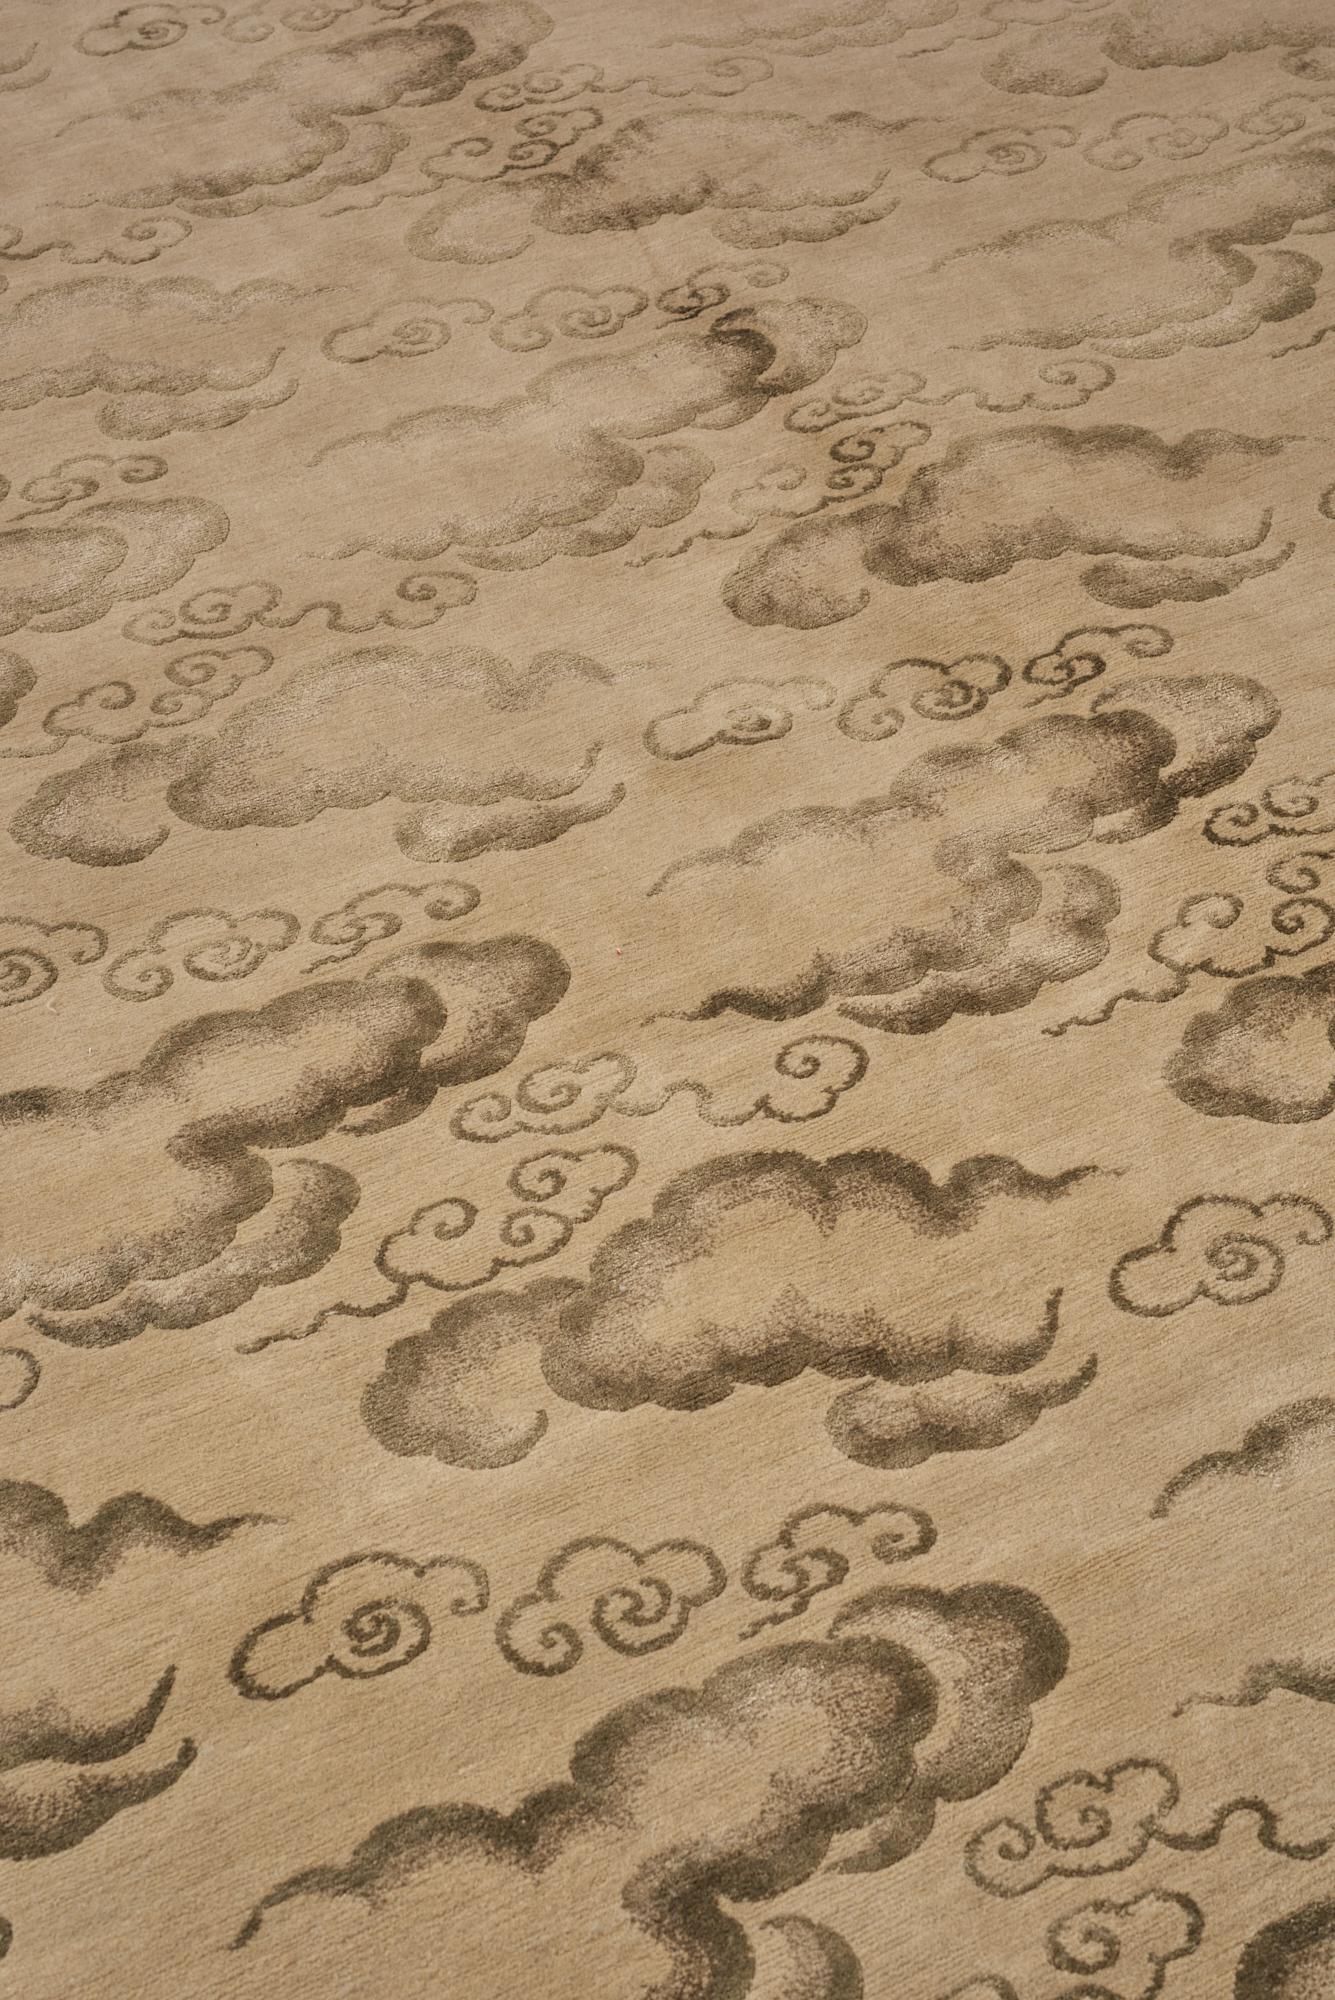 Rugs and floor coverings 
Rug pattern: Clouds
Dimensions: 9'2